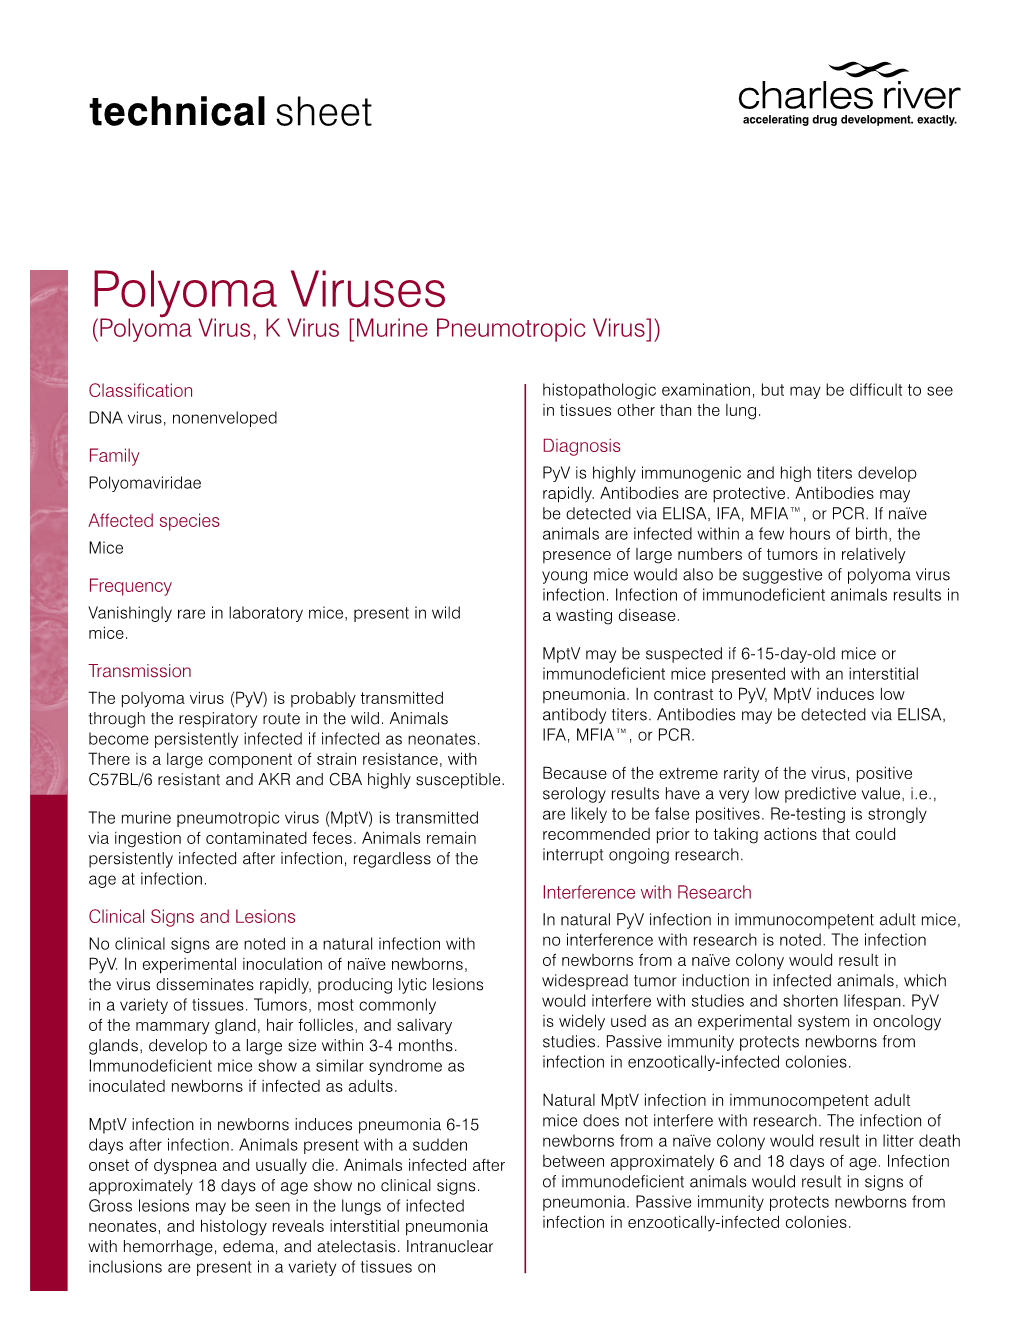 Polyoma Viruses (Polyoma Virus, K Virus [Murine Pneumotropic Virus])